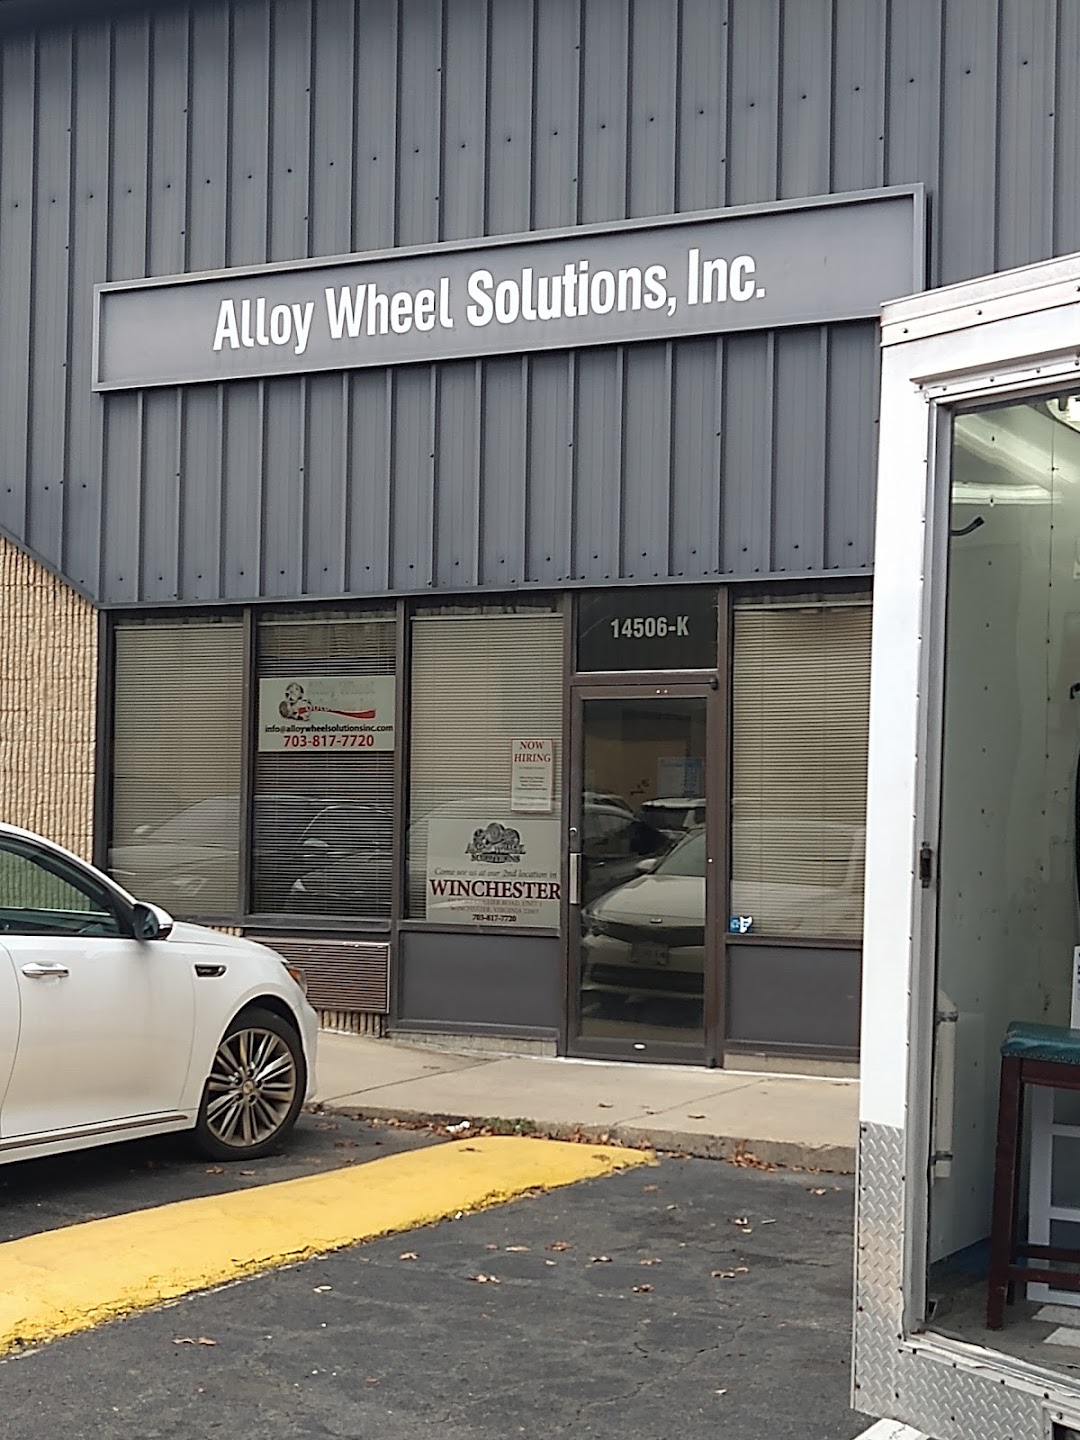 Alloy Wheel Solutions, Inc